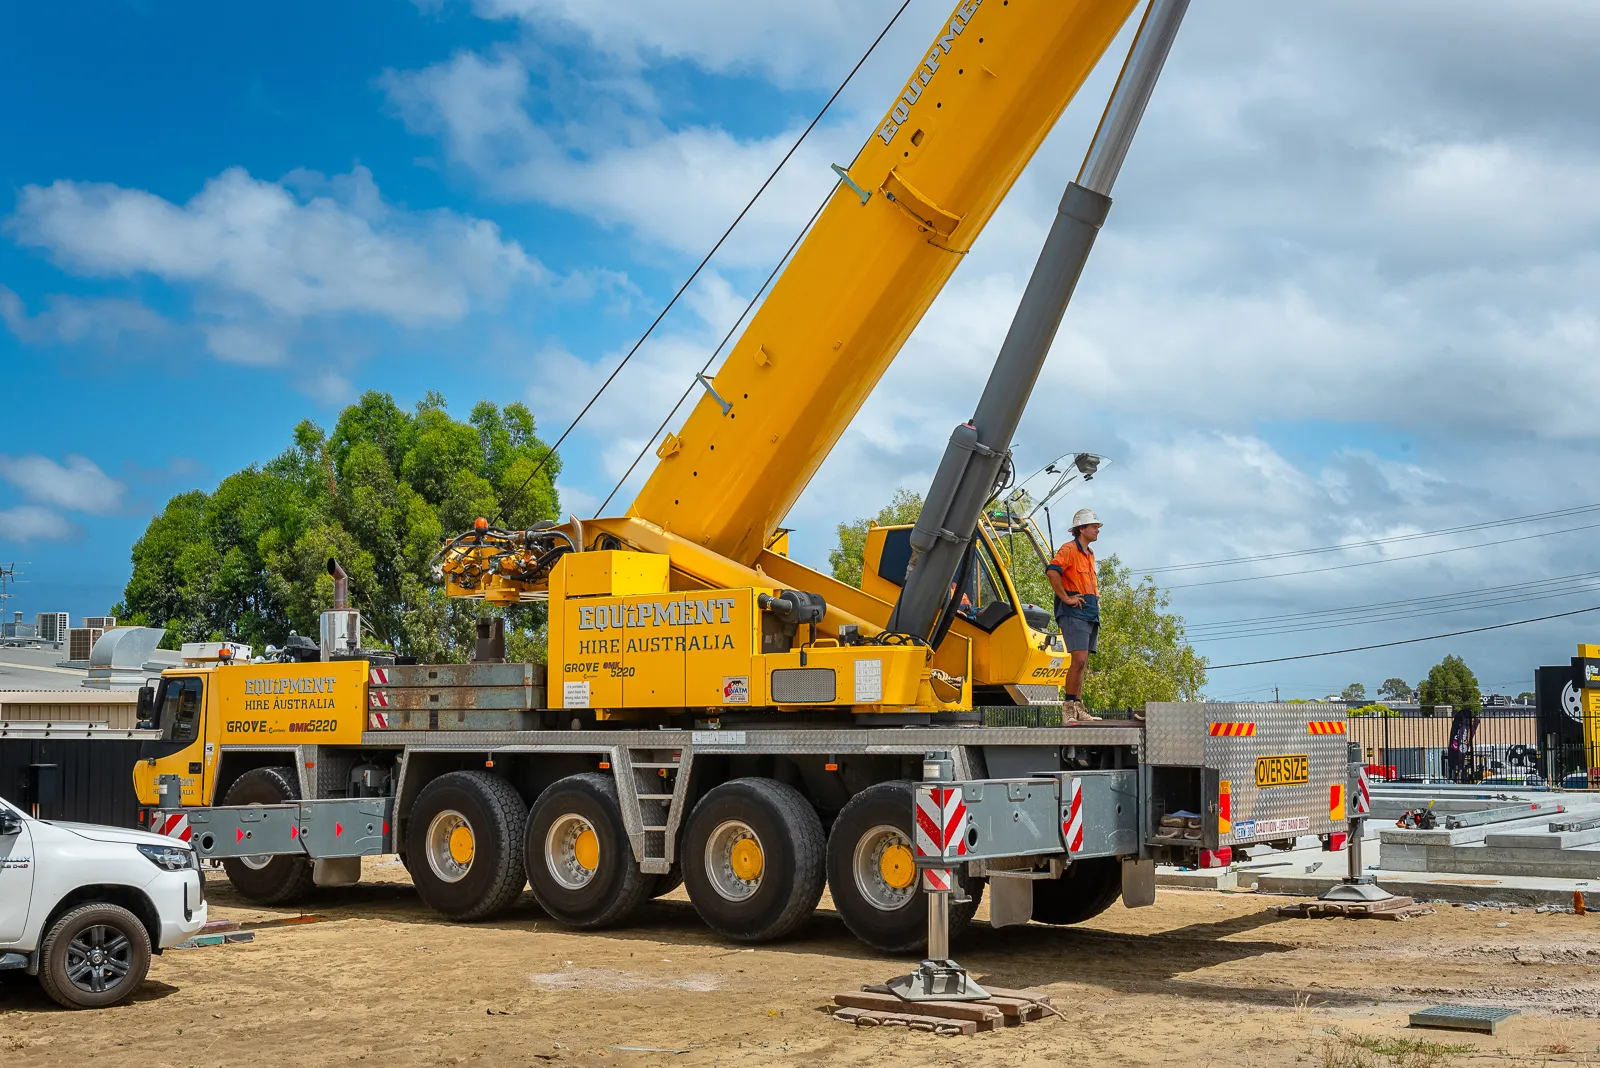 JD Rigging & Construction, Equipment Hire Australia crane for hire